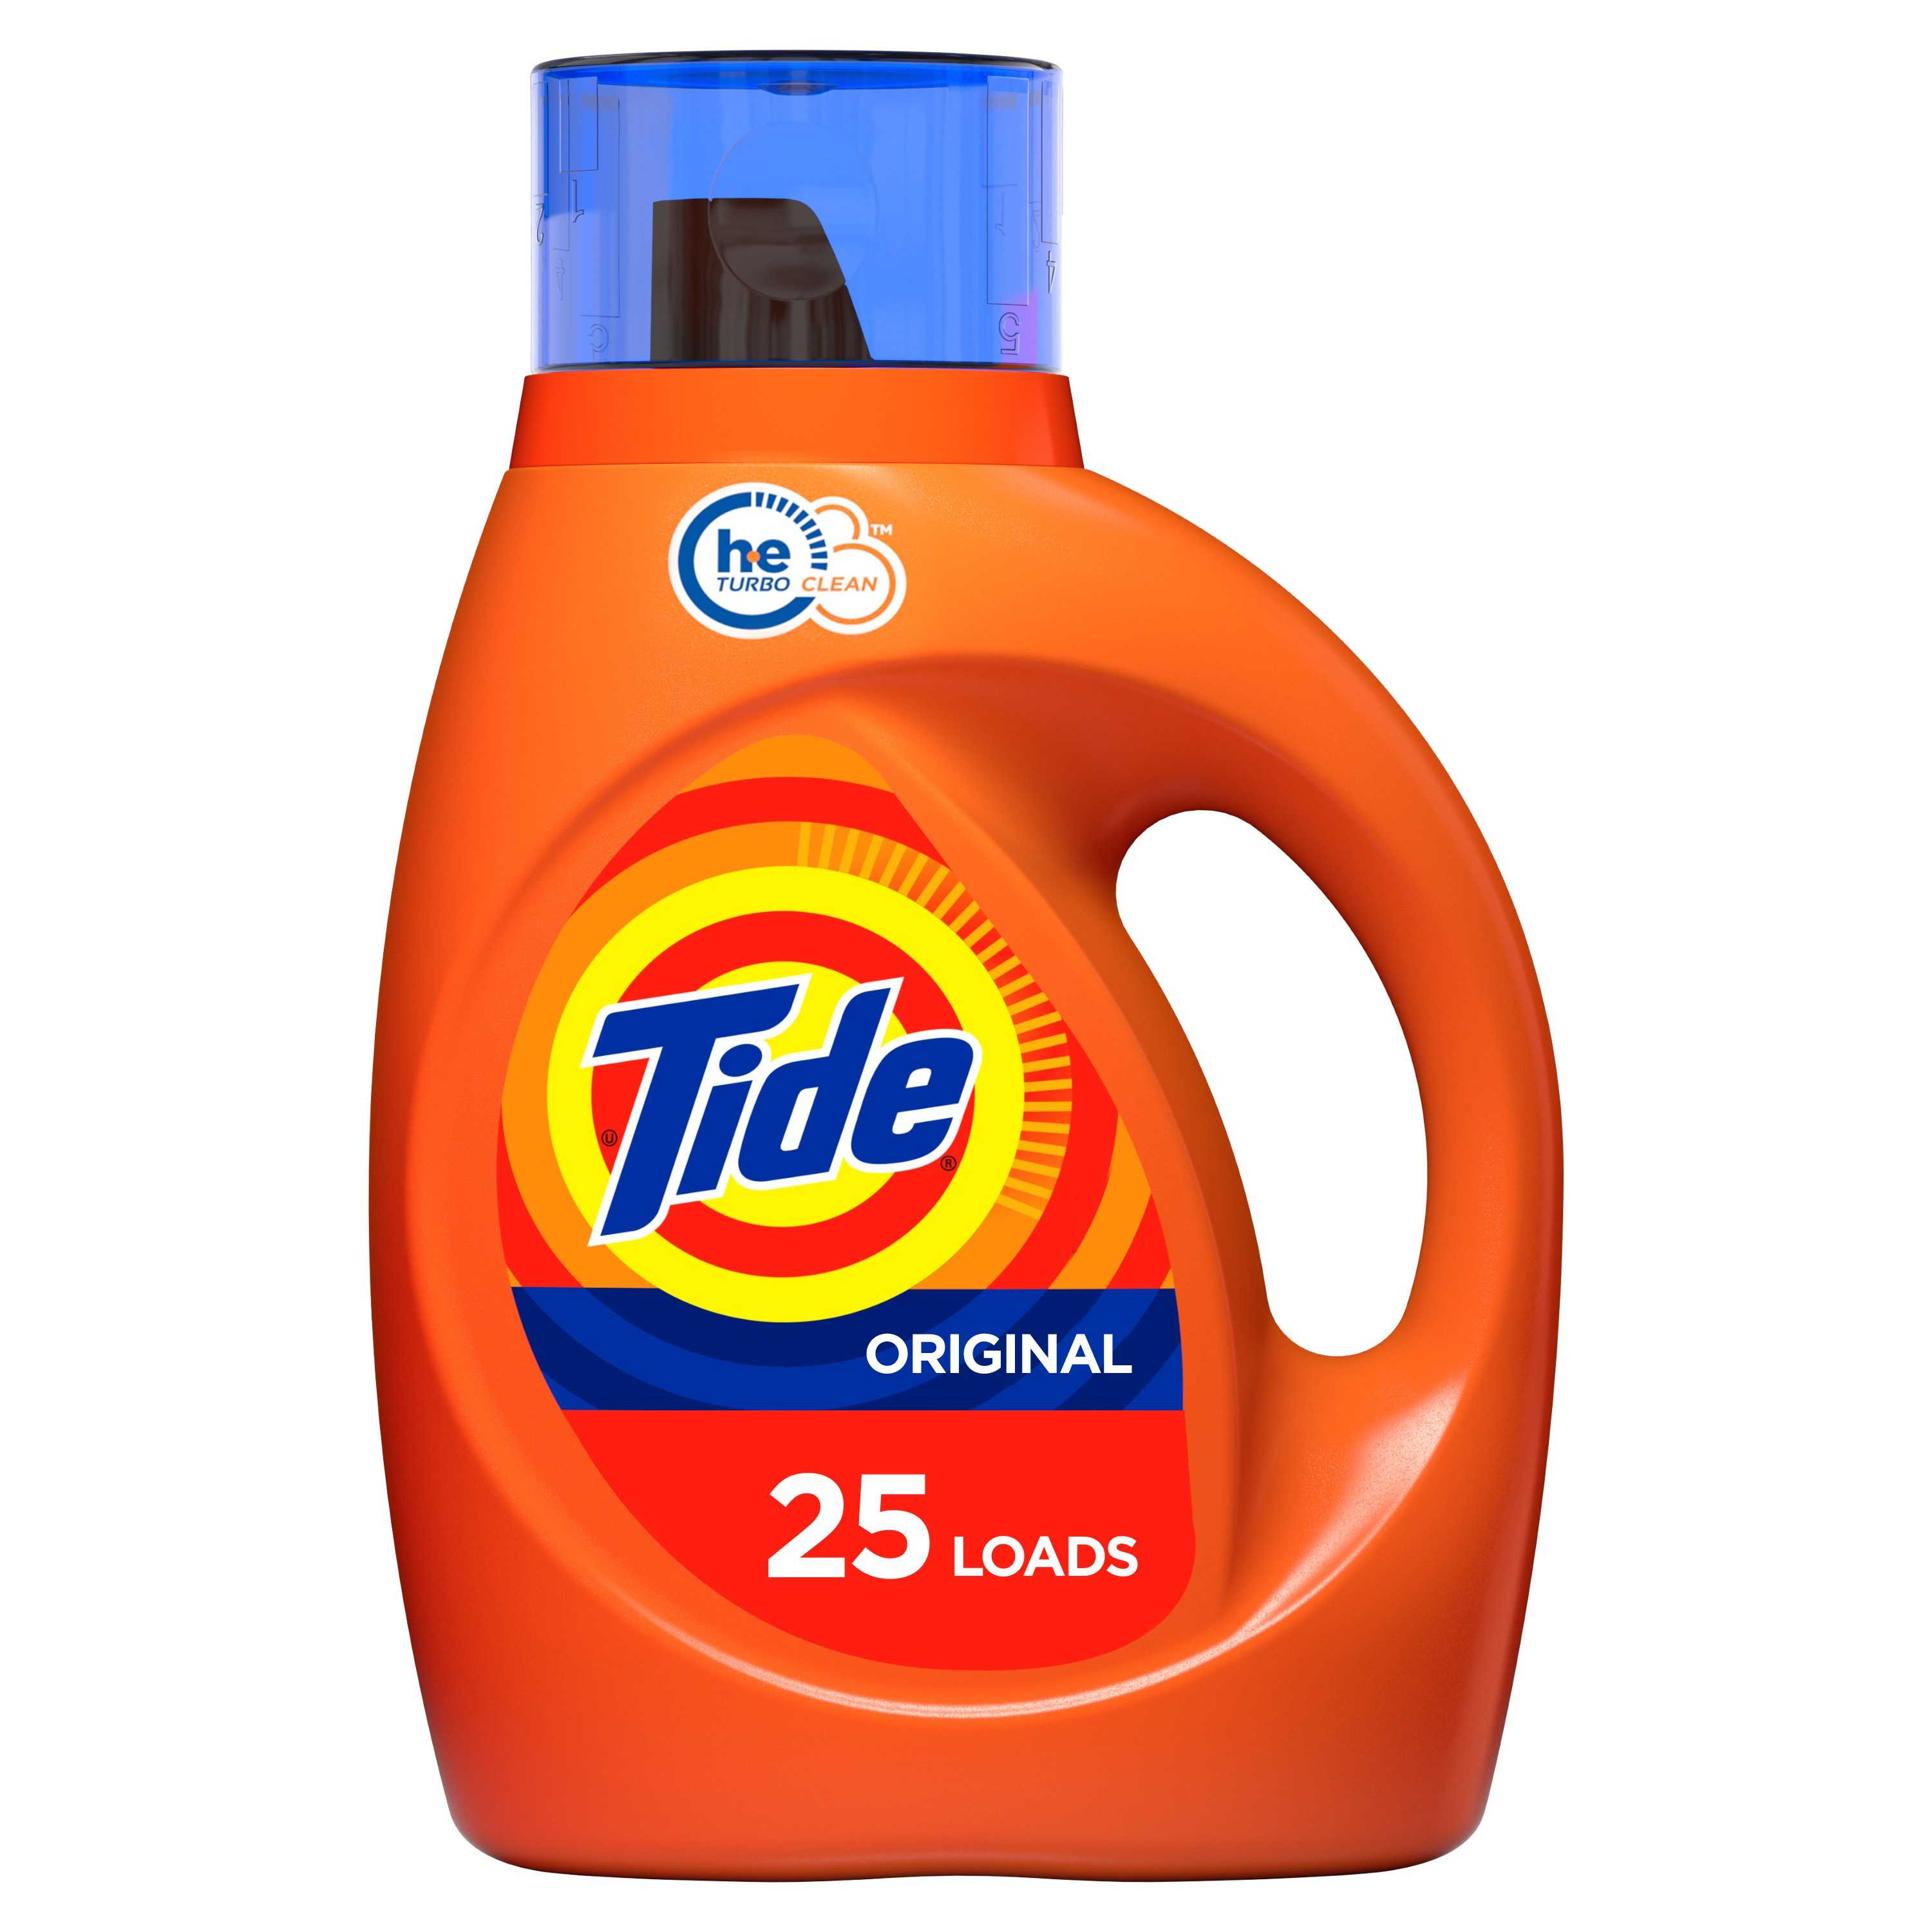 Tide Original He, 25 Loads Liquid Laundry Detergent, Original, 37 fl oz